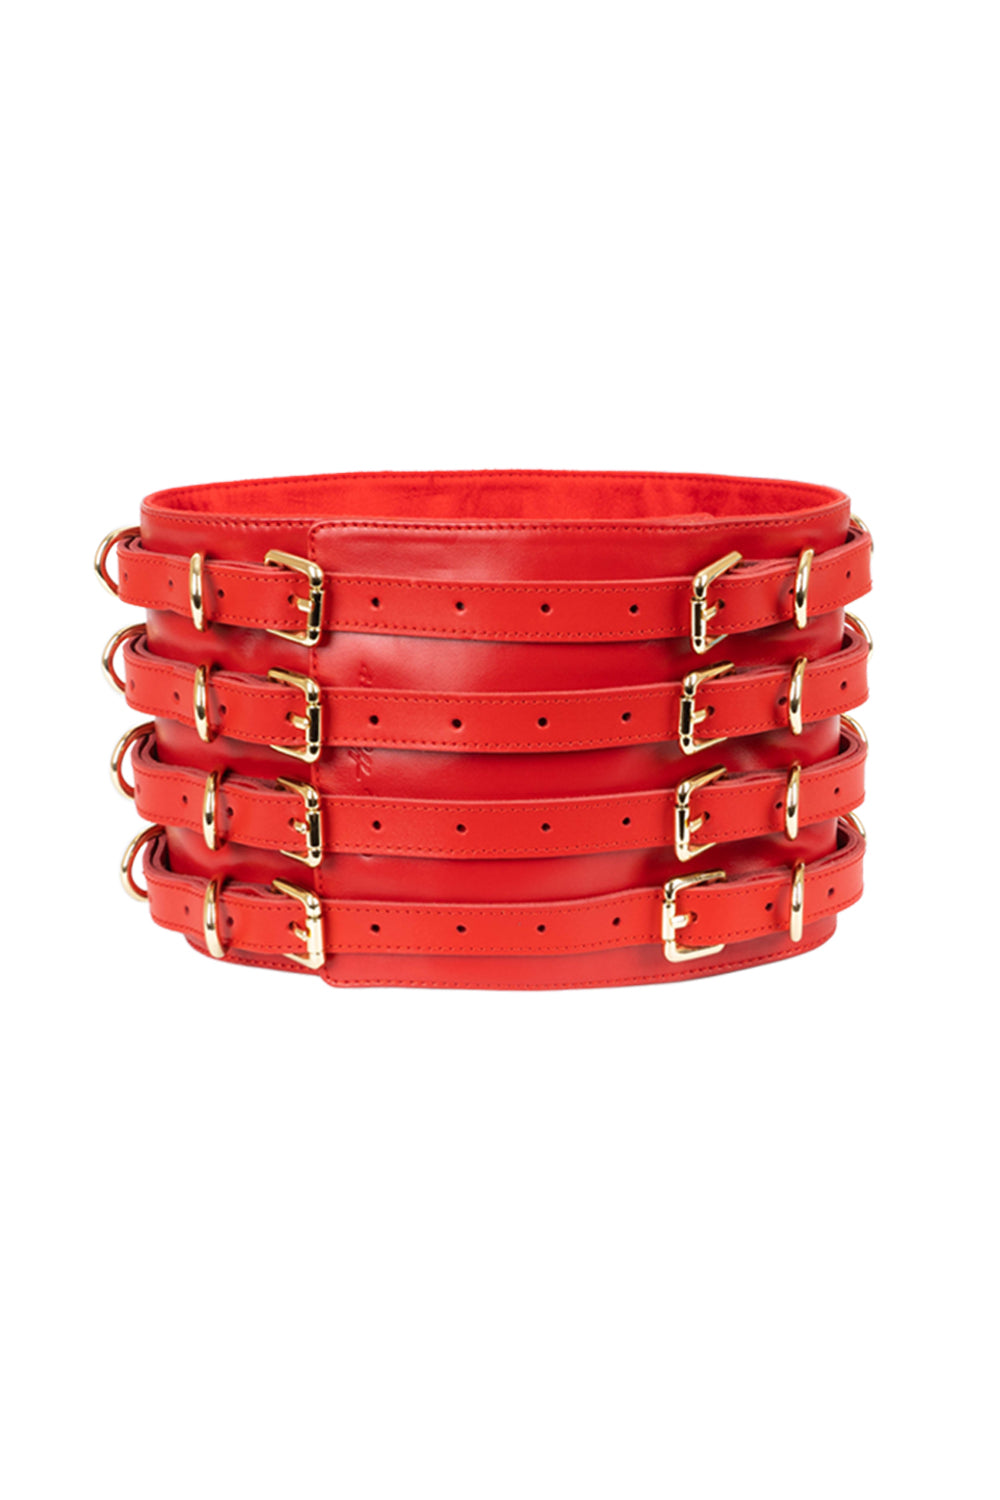 Wide waist belt with 4 adjustable straps. Red